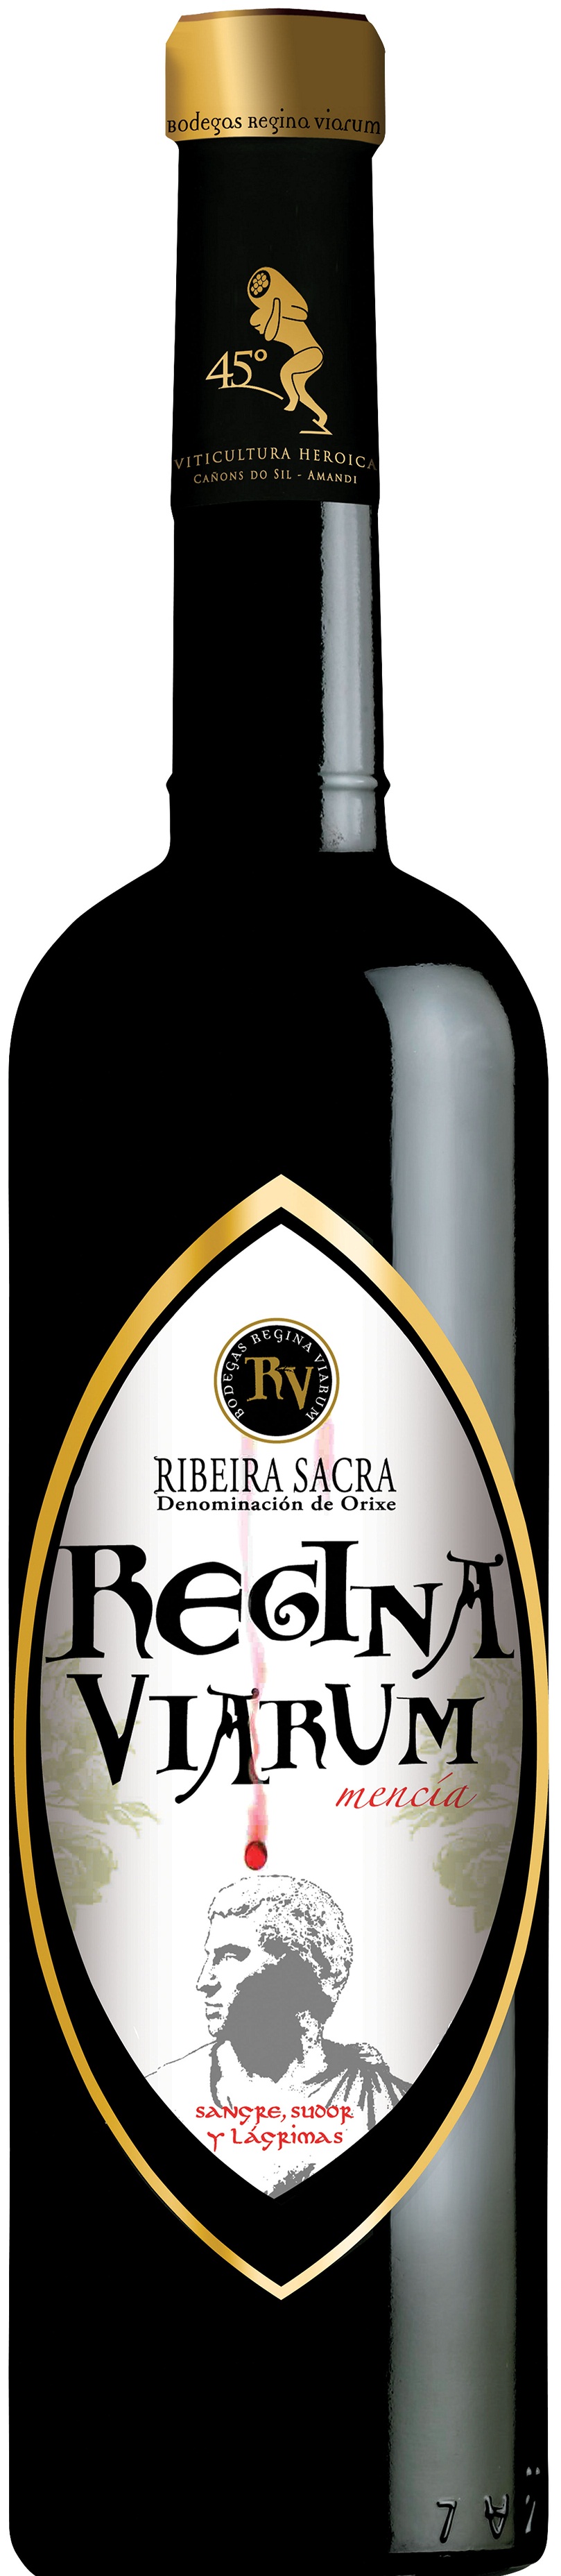 Image of Wine bottle Regina Viarum